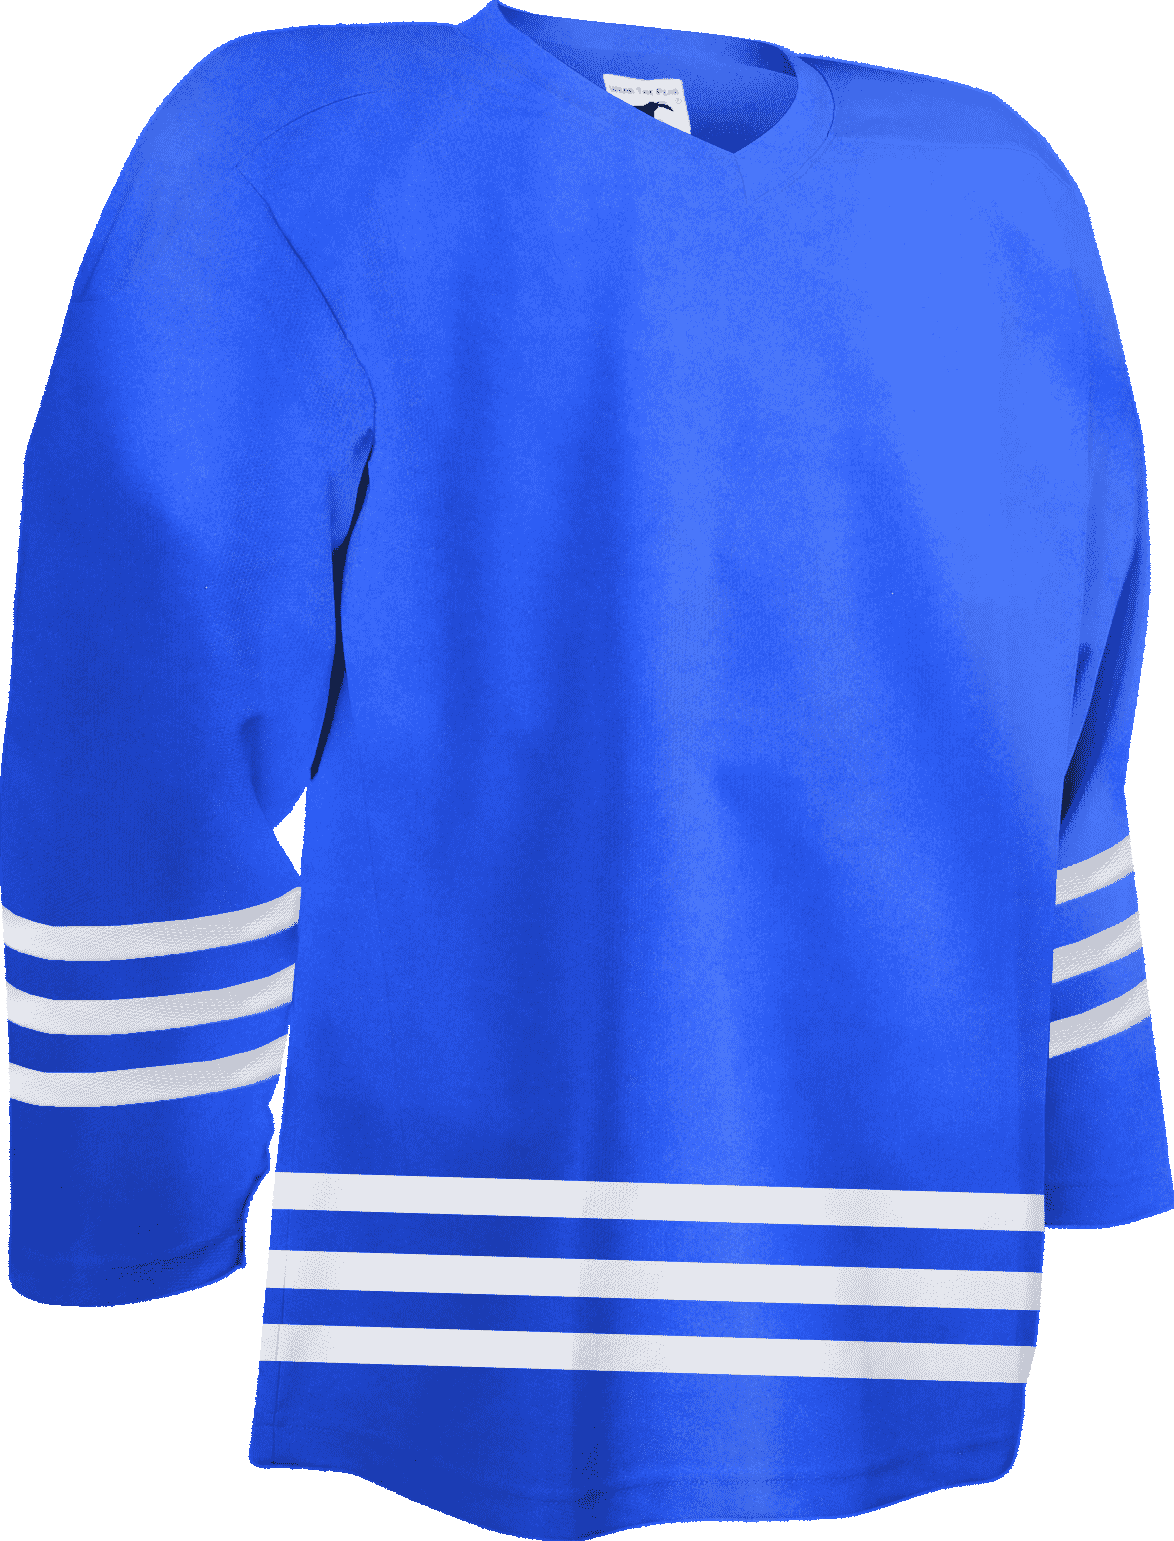 Pearsox 100 Denier Blank Polyester Hockey Jersey - Royal (Adult Goalie), Blue